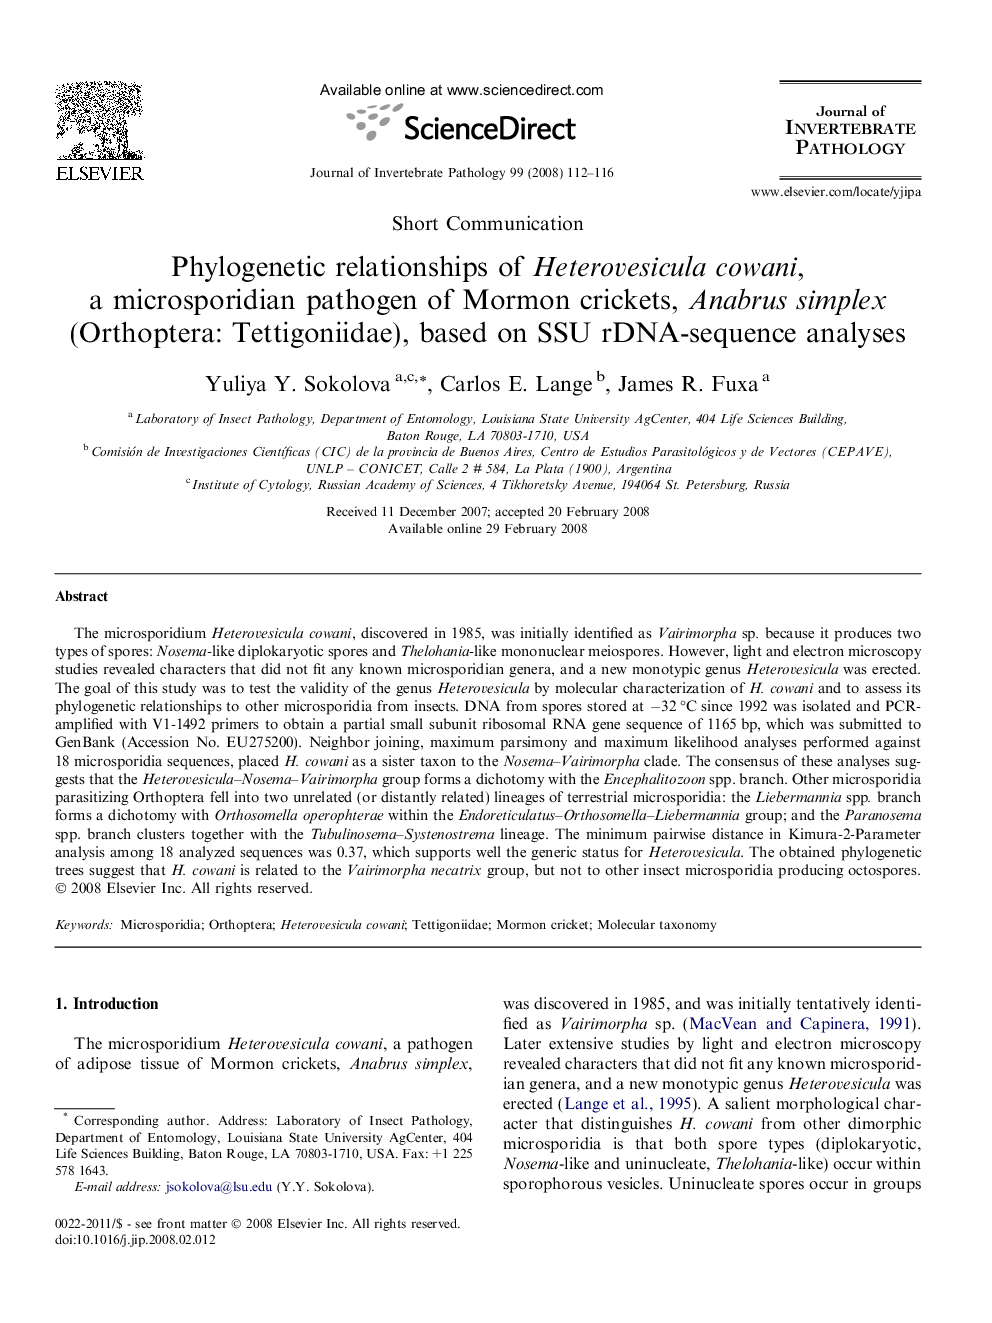 Phylogenetic relationships of Heterovesicula cowani, a microsporidian pathogen of Mormon crickets, Anabrus simplex (Orthoptera: Tettigoniidae), based on SSU rDNA-sequence analyses